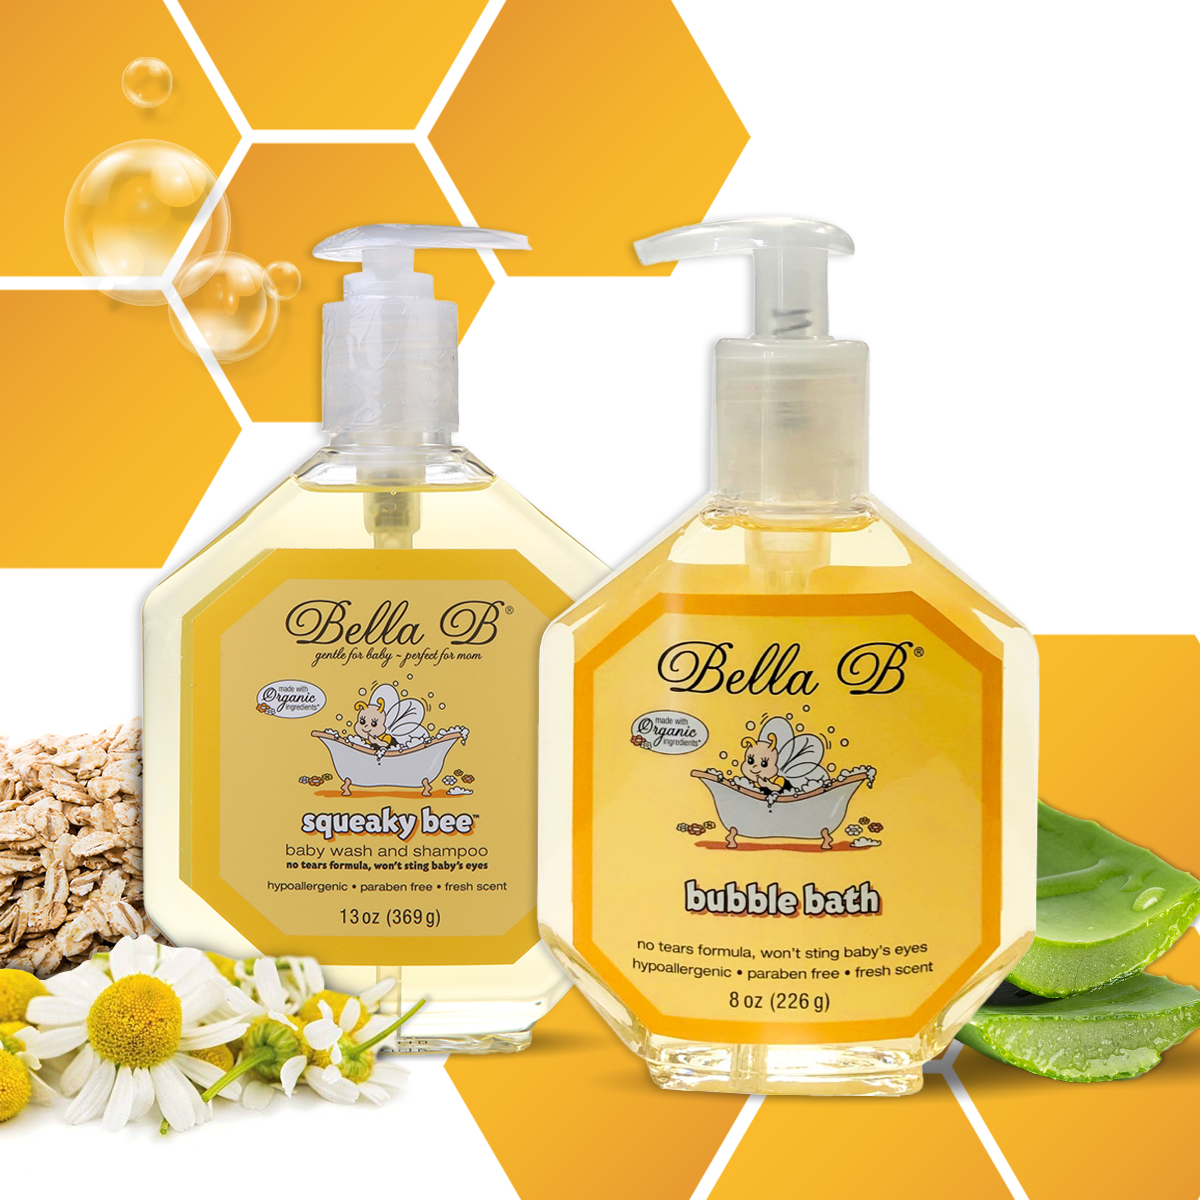 Bella B Gift Set - Squeaky Bee Baby Wash & Shampoo 13 oz and Bubble Bath 8 oz